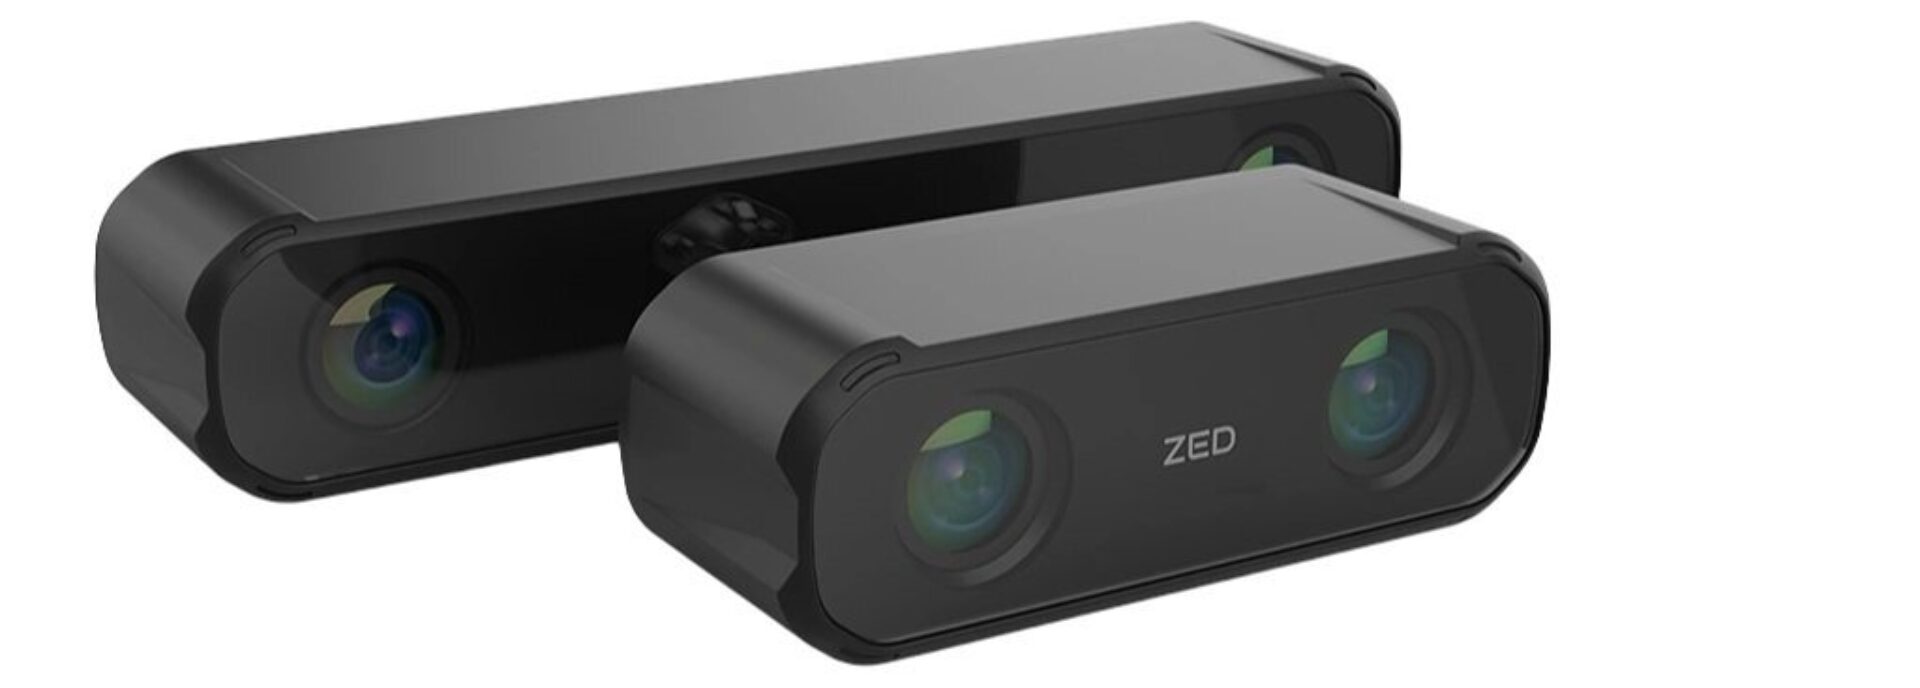 The ZED X and X mini 3D camera